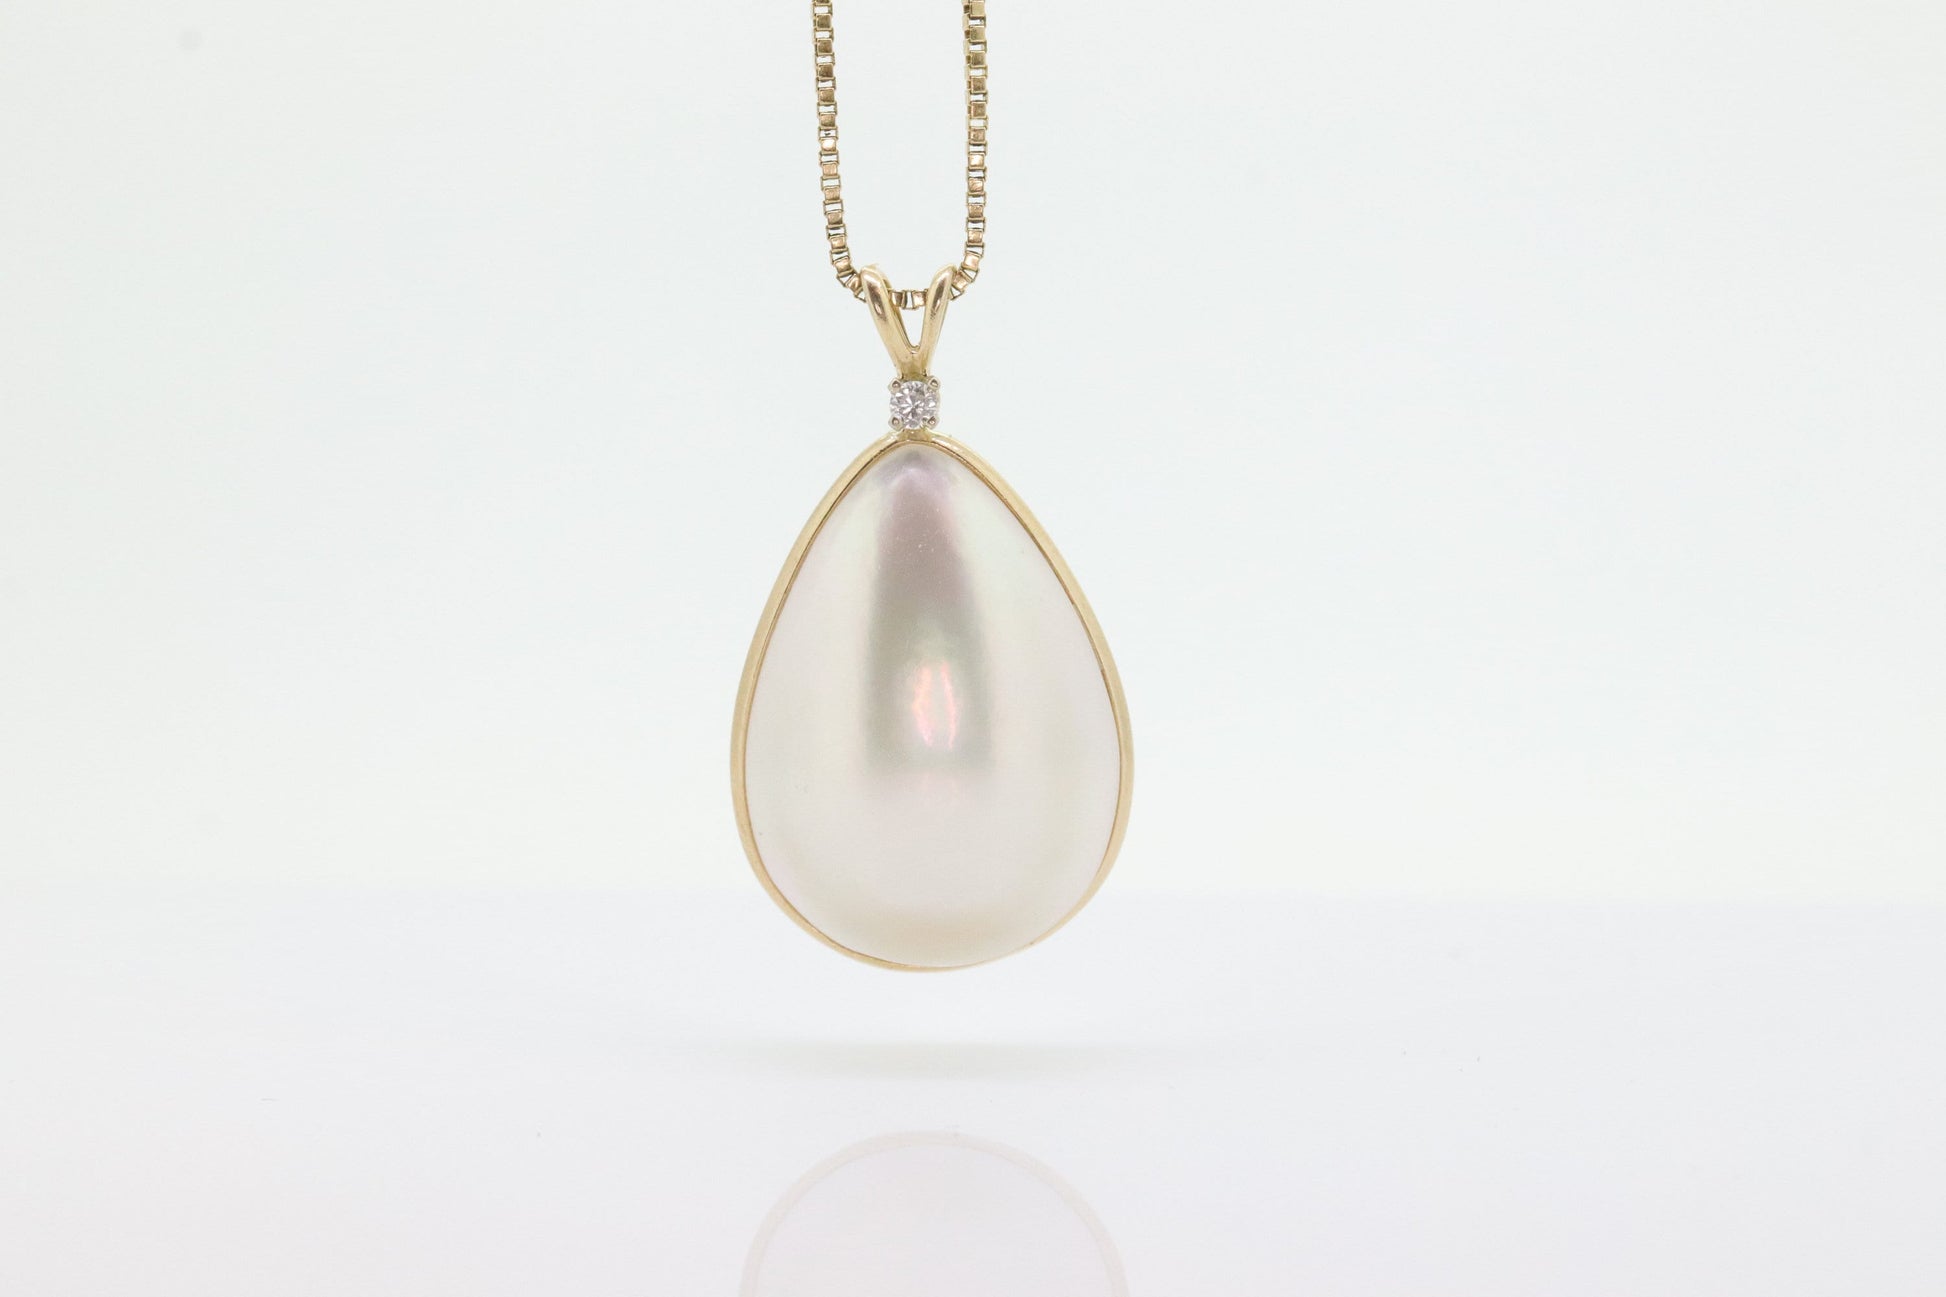 14k Large MABE Pearl Diamond Pendant. Leslies Jewelry Pendant. Mabe Pearl Drop pendant with box chain necklace. st(87)